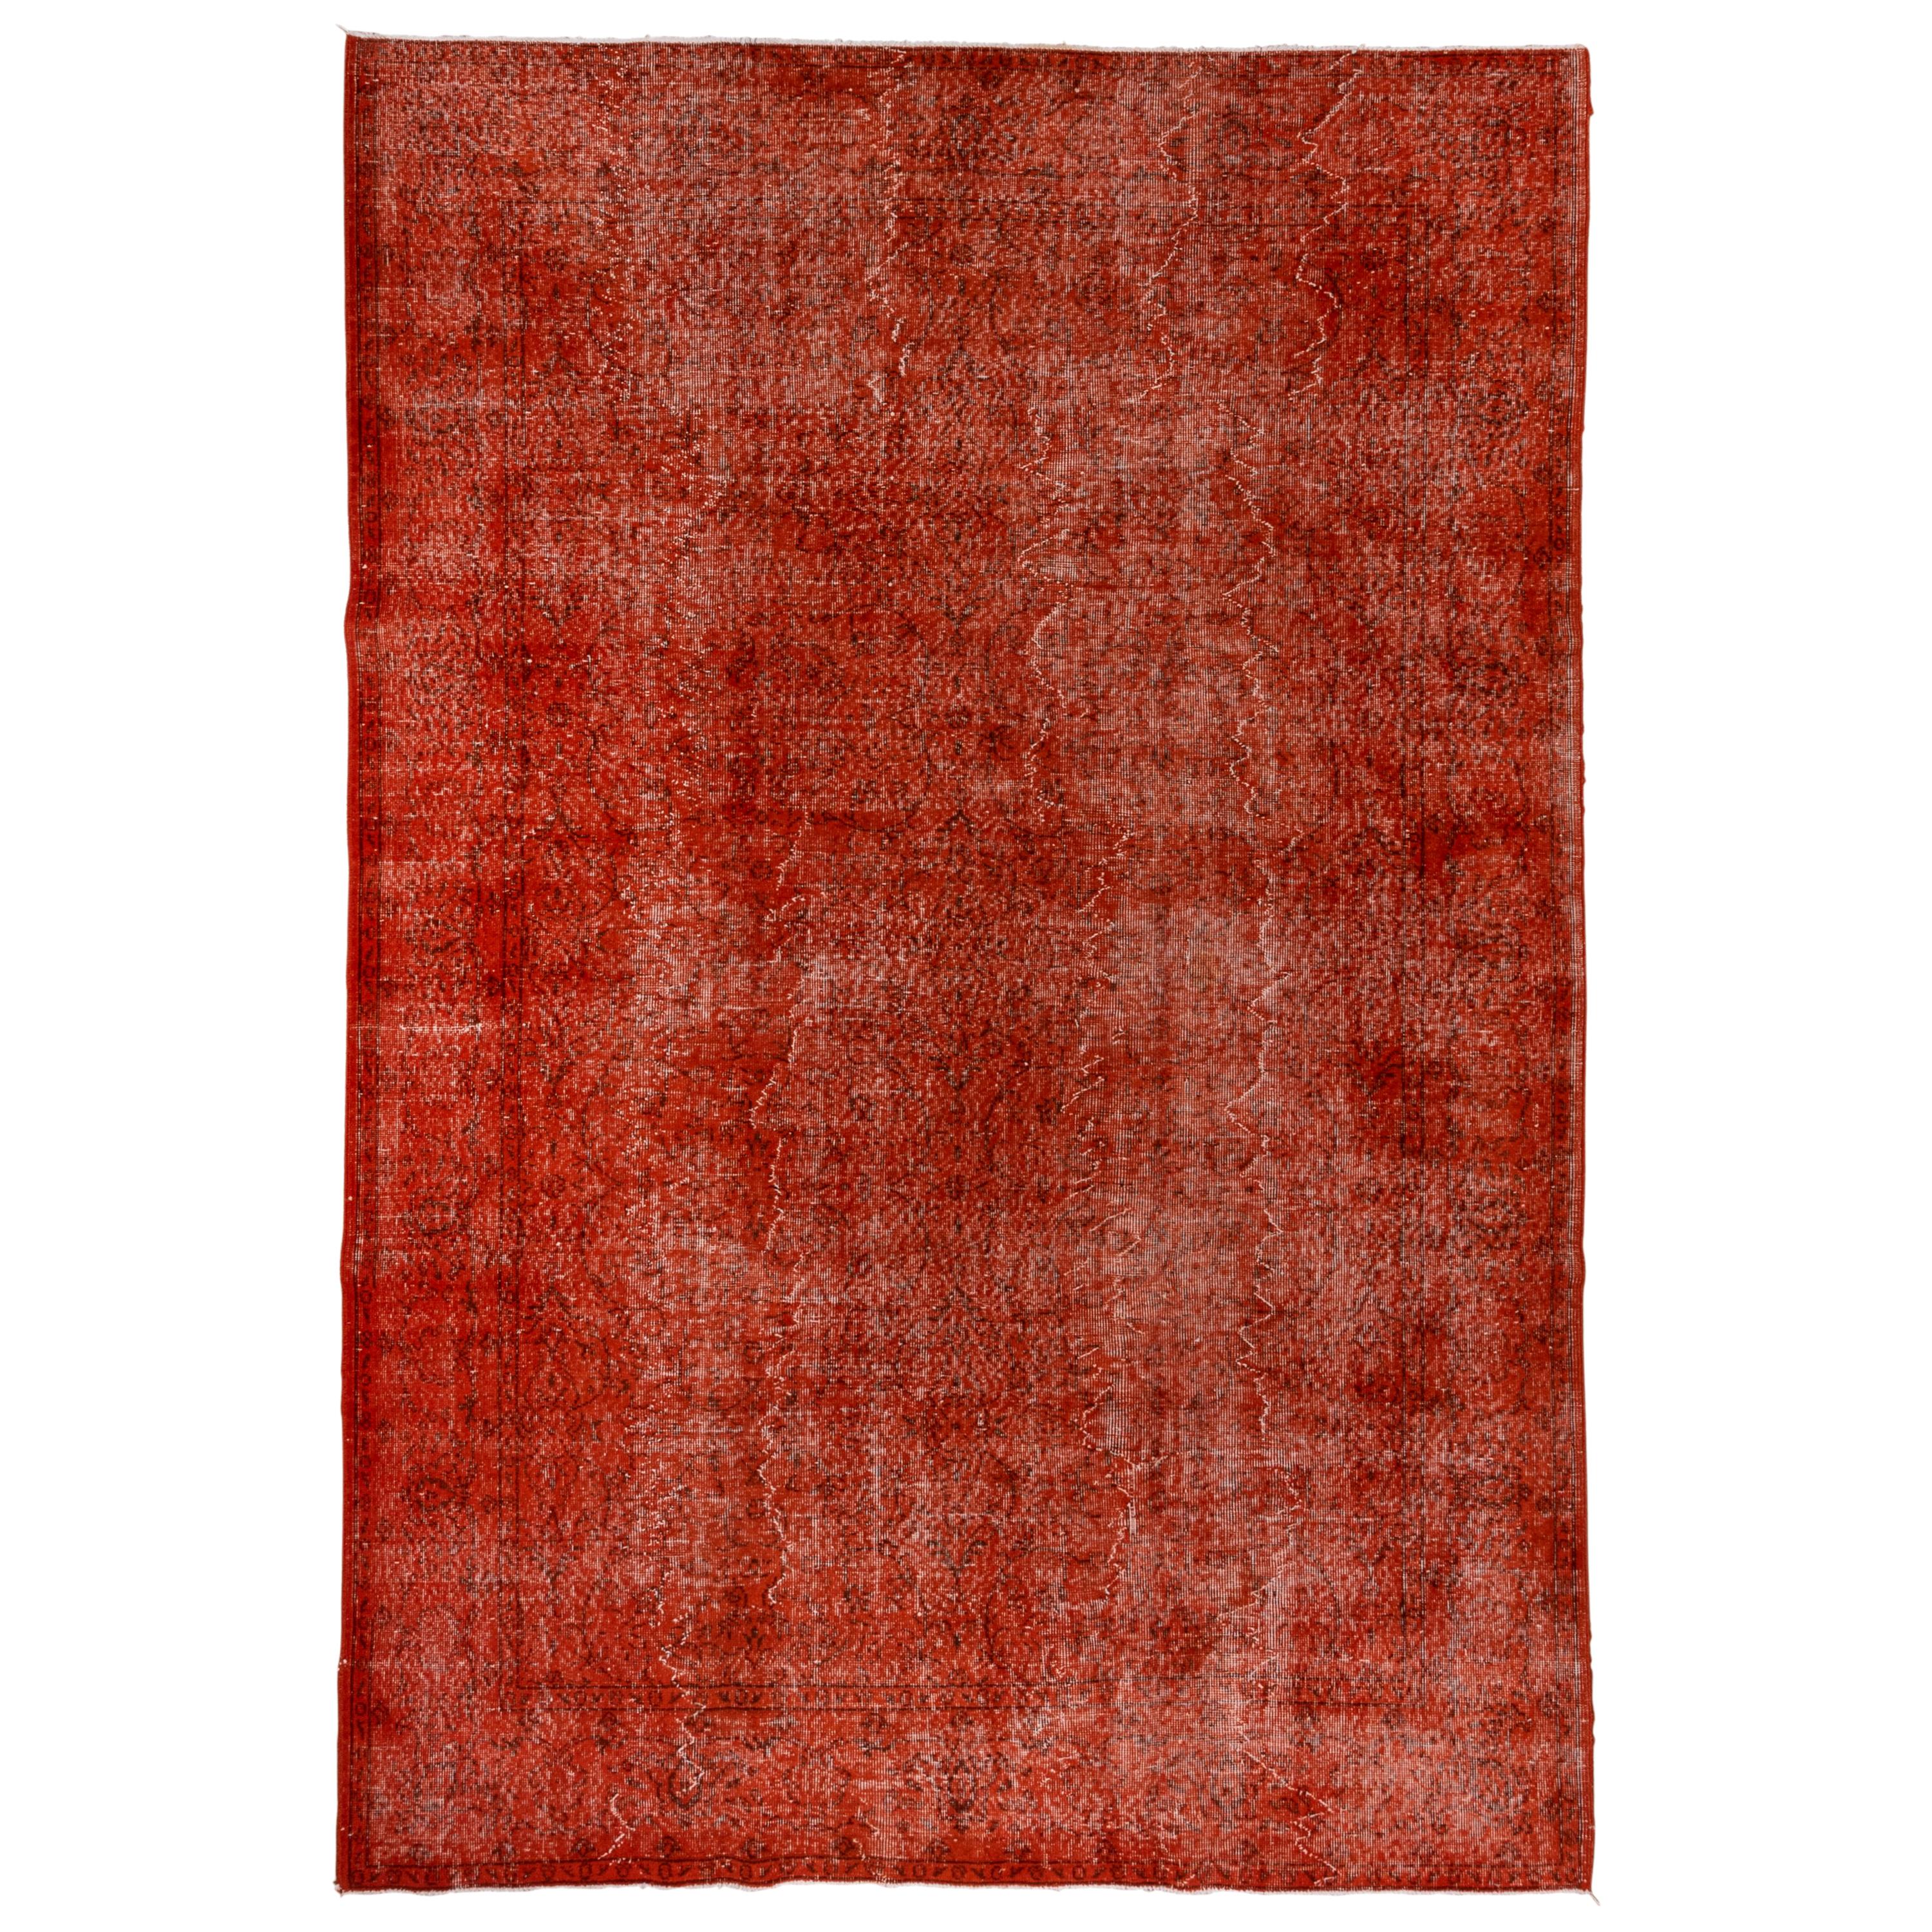 Vintage Red Overdyed Carpet For Sale